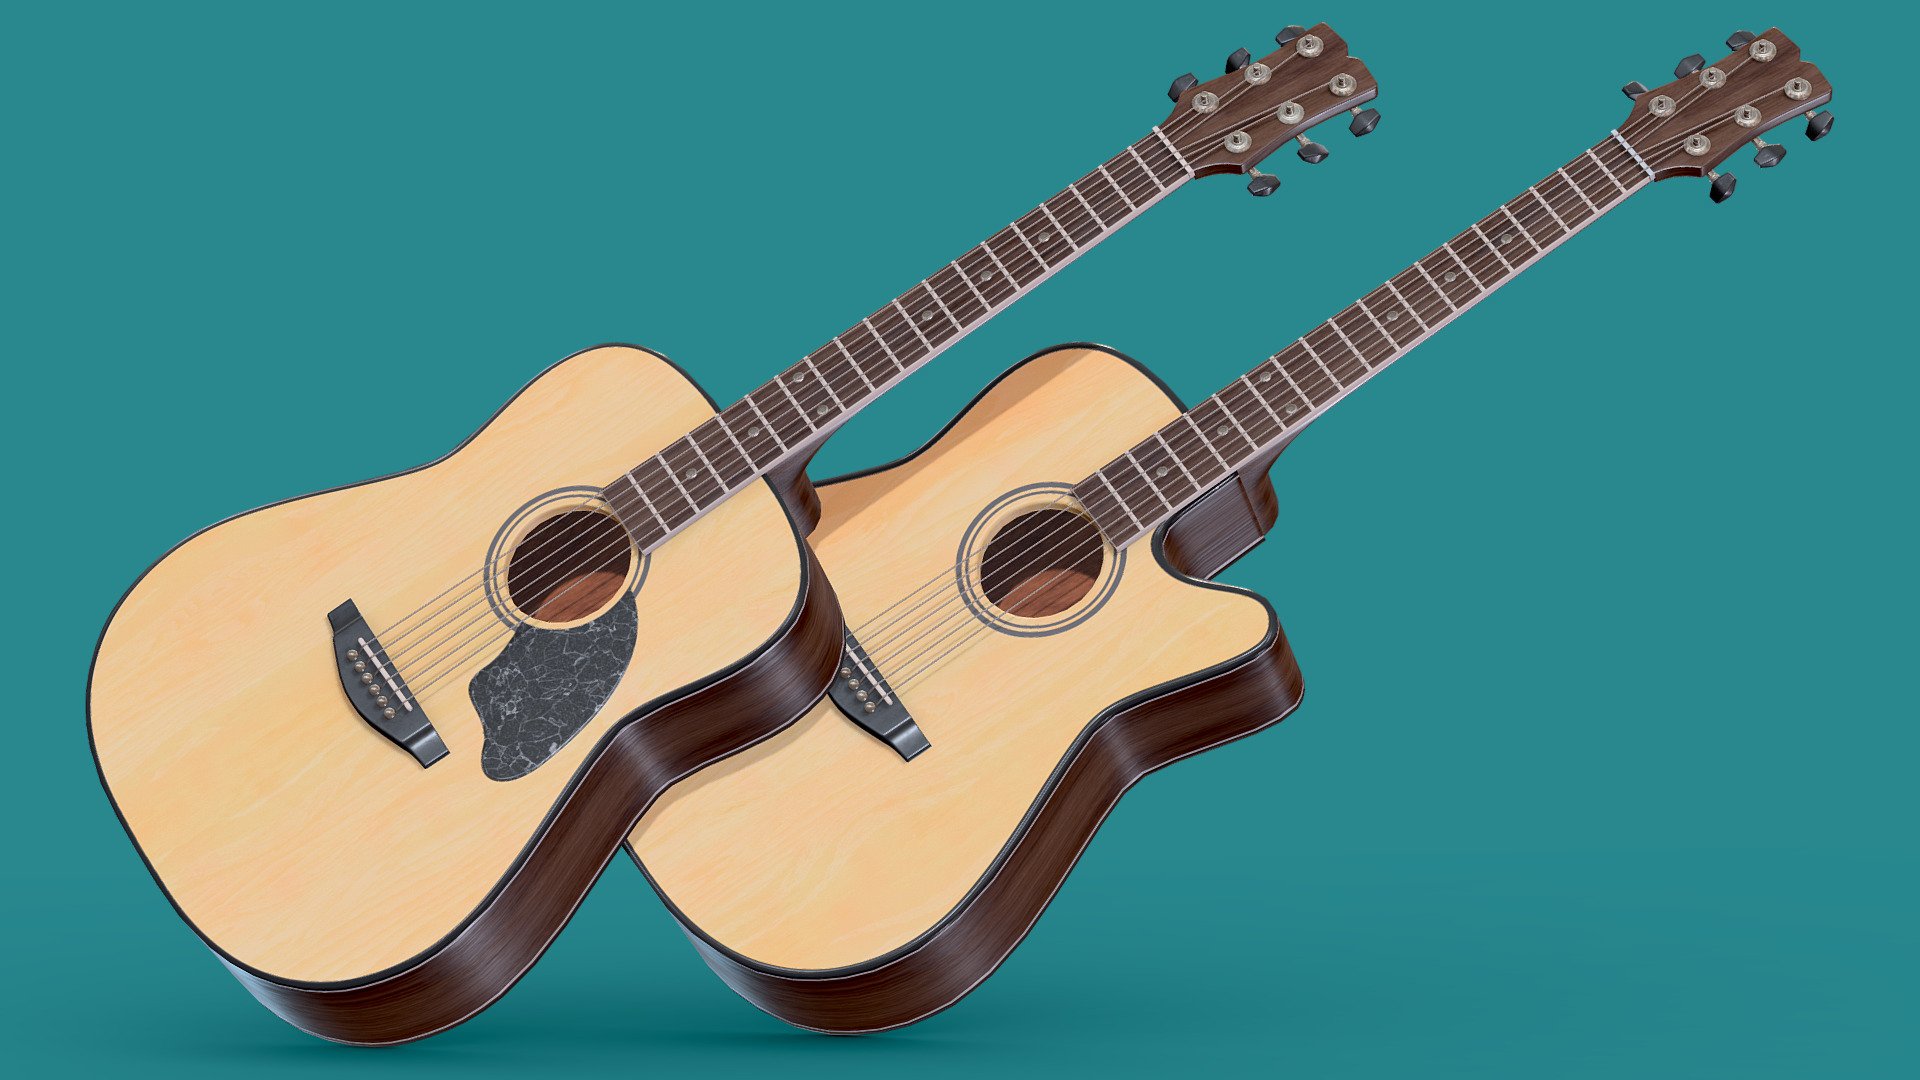 Acoustic Guitars Strings Instrument Buy Royalty Free 3d Model By Maddhattpatt Maddhatt 2392